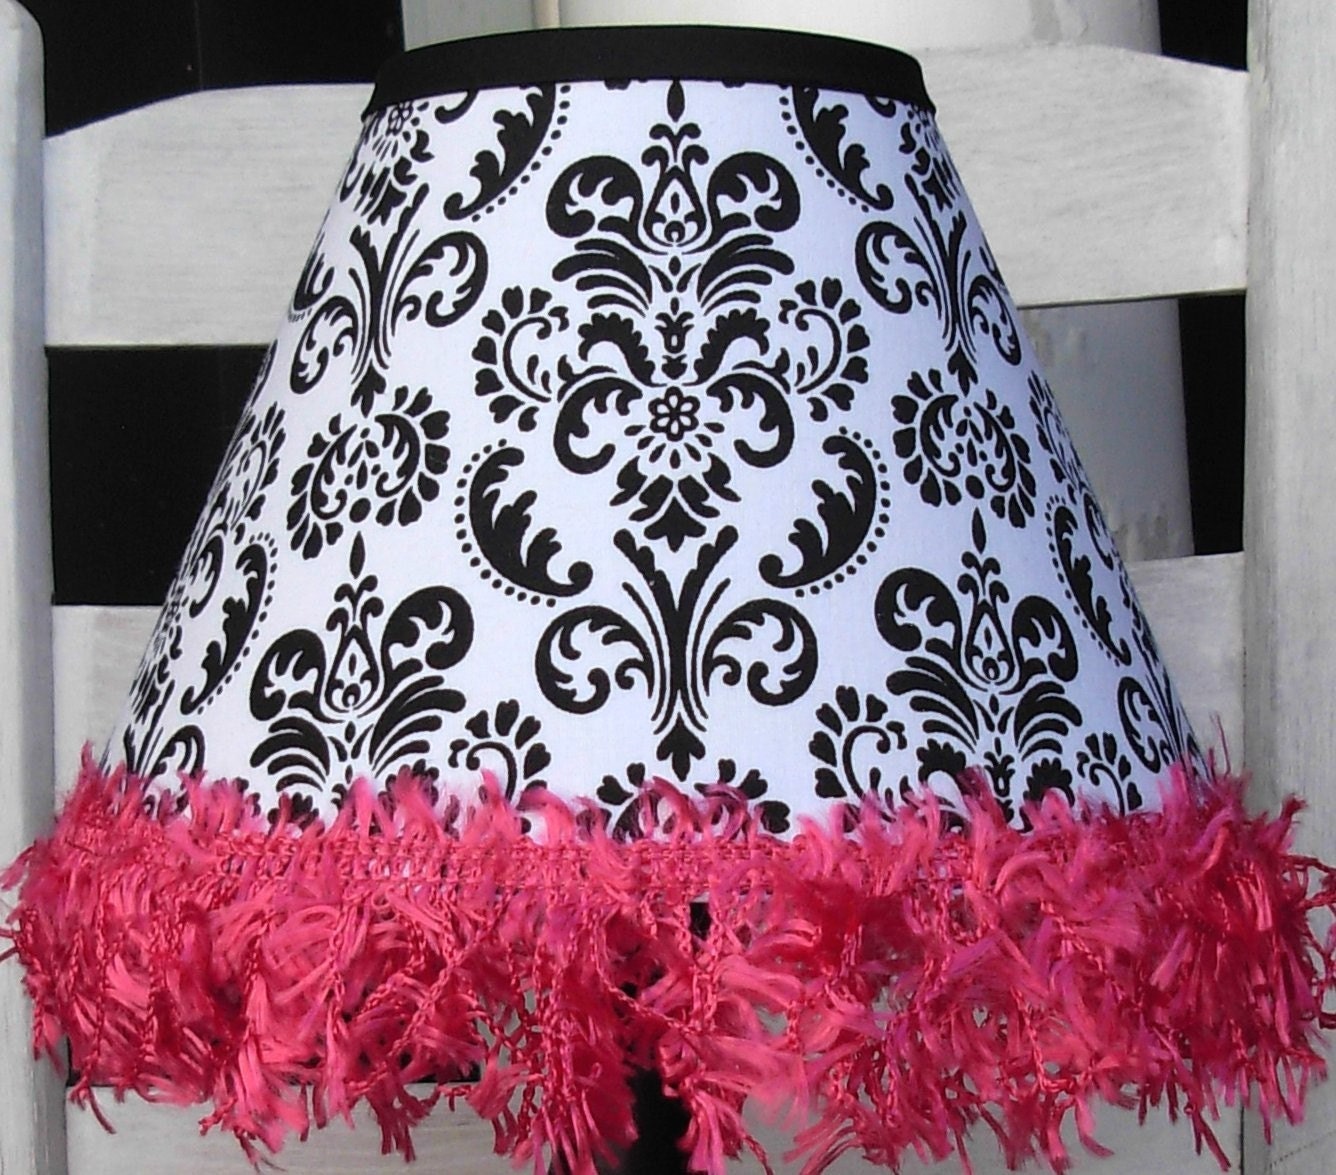  Pink Lamp Shades on White Damask With Black Print Lamp Shade   Sassy Hot Pink Fringe